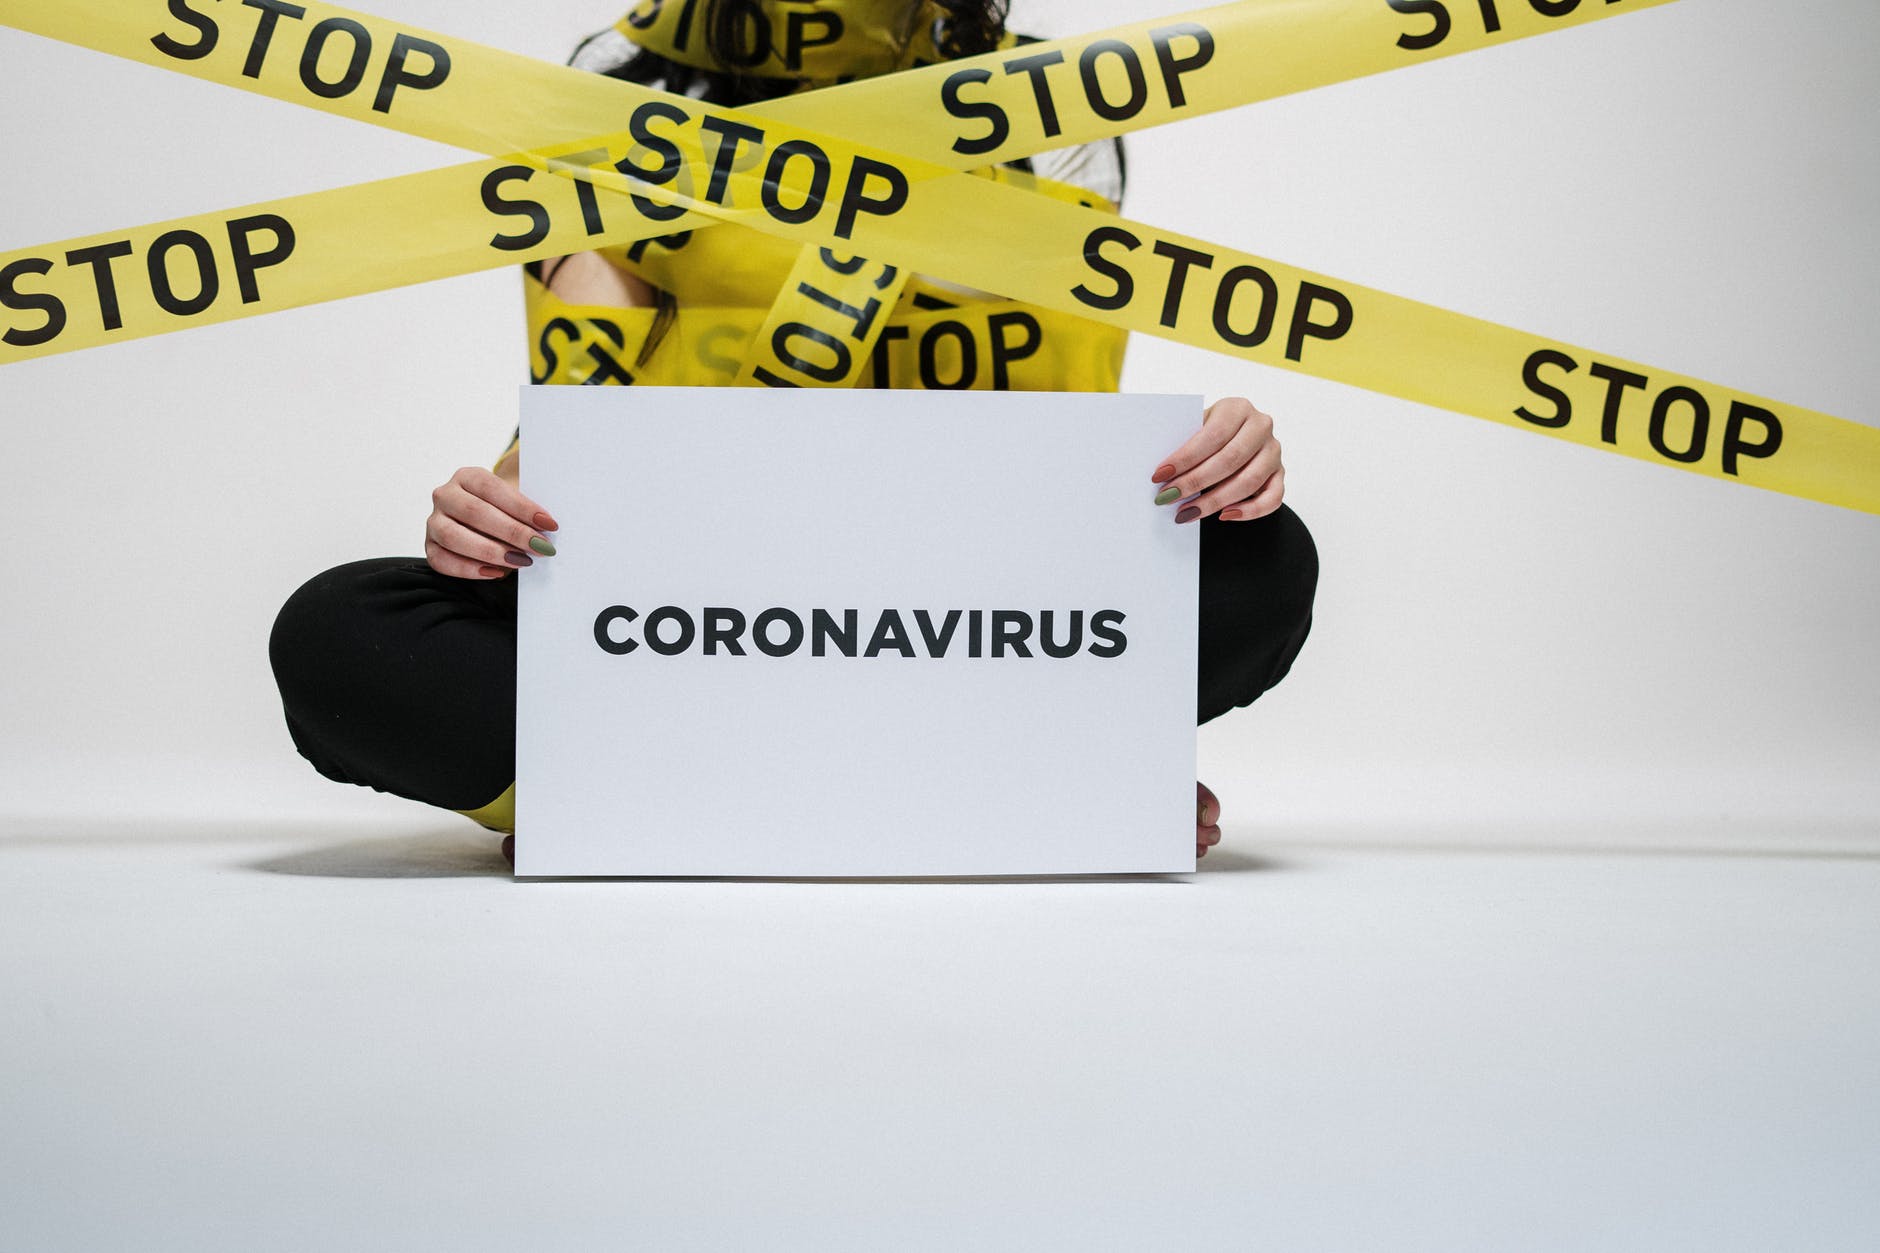 Coronavirus, Covid-19, Pandemic, Lockdown